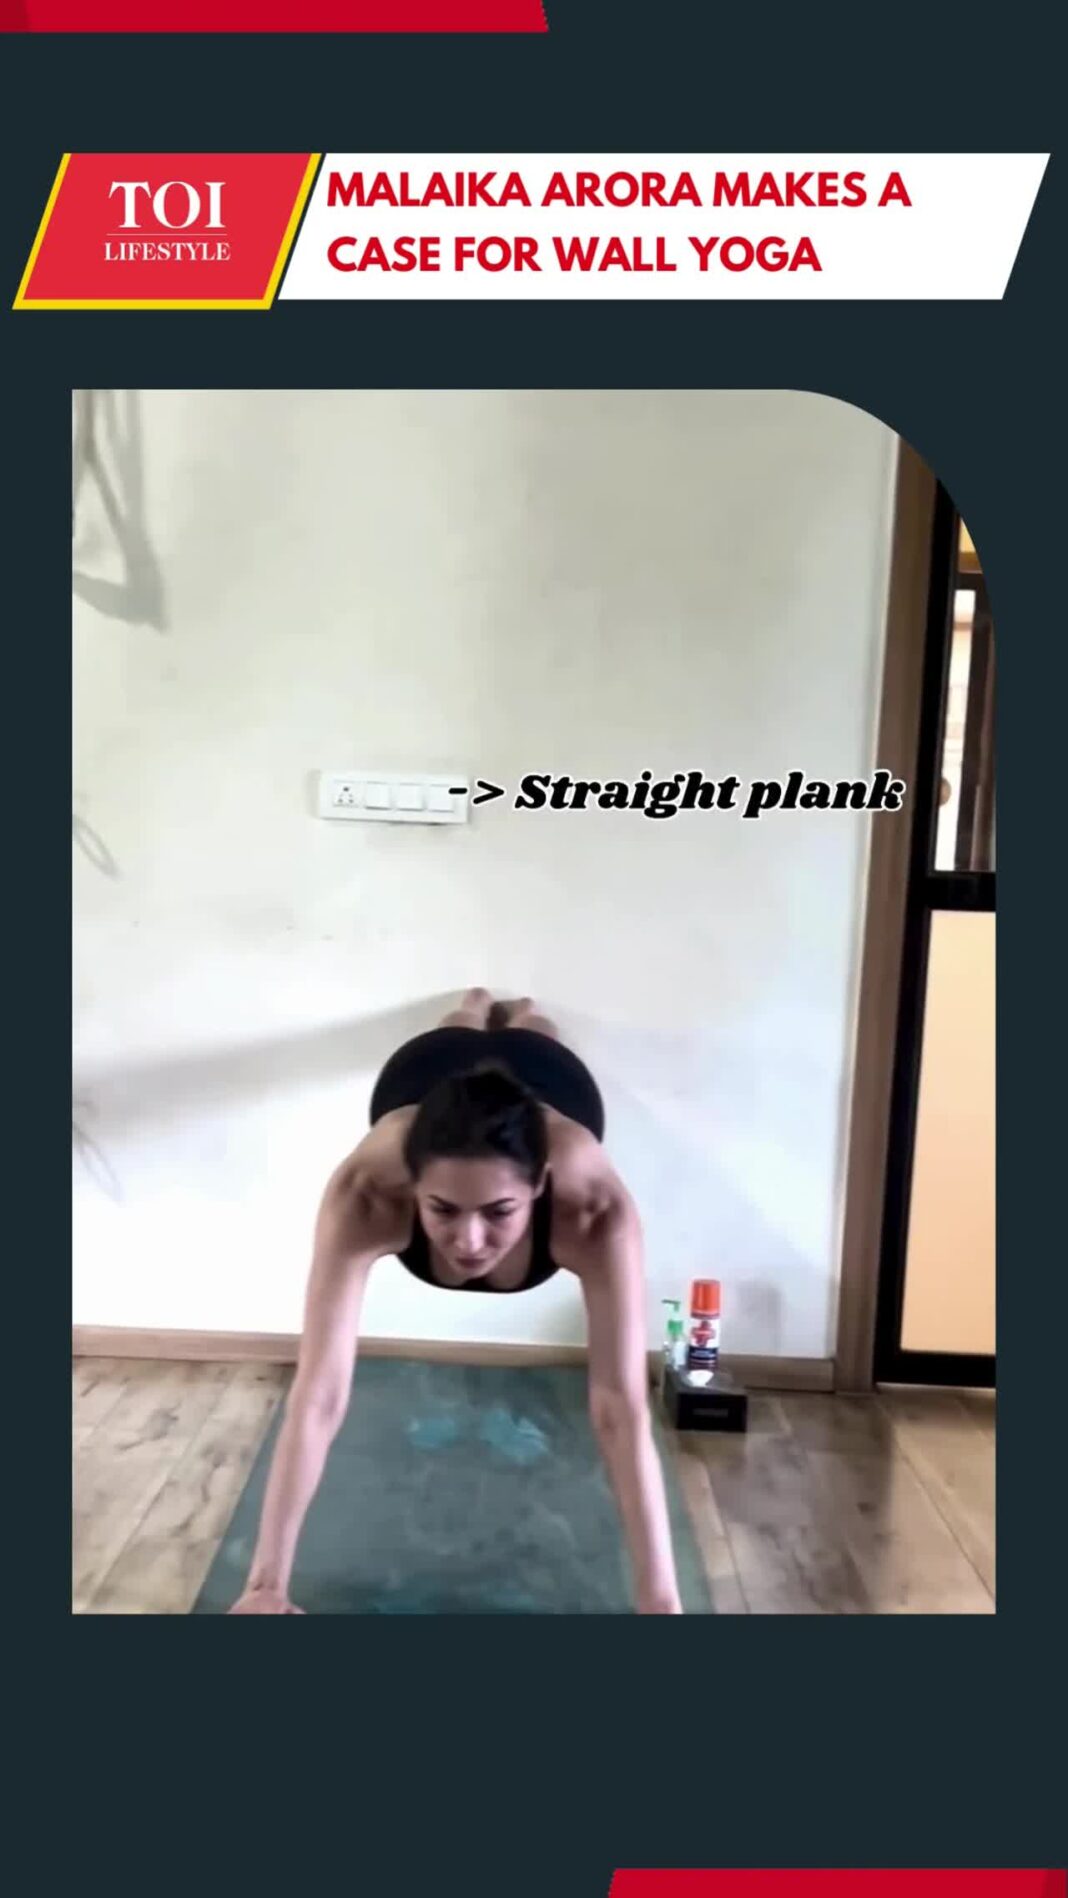 malaika-arora’s-quick-guide-for-quick-wall-yoga